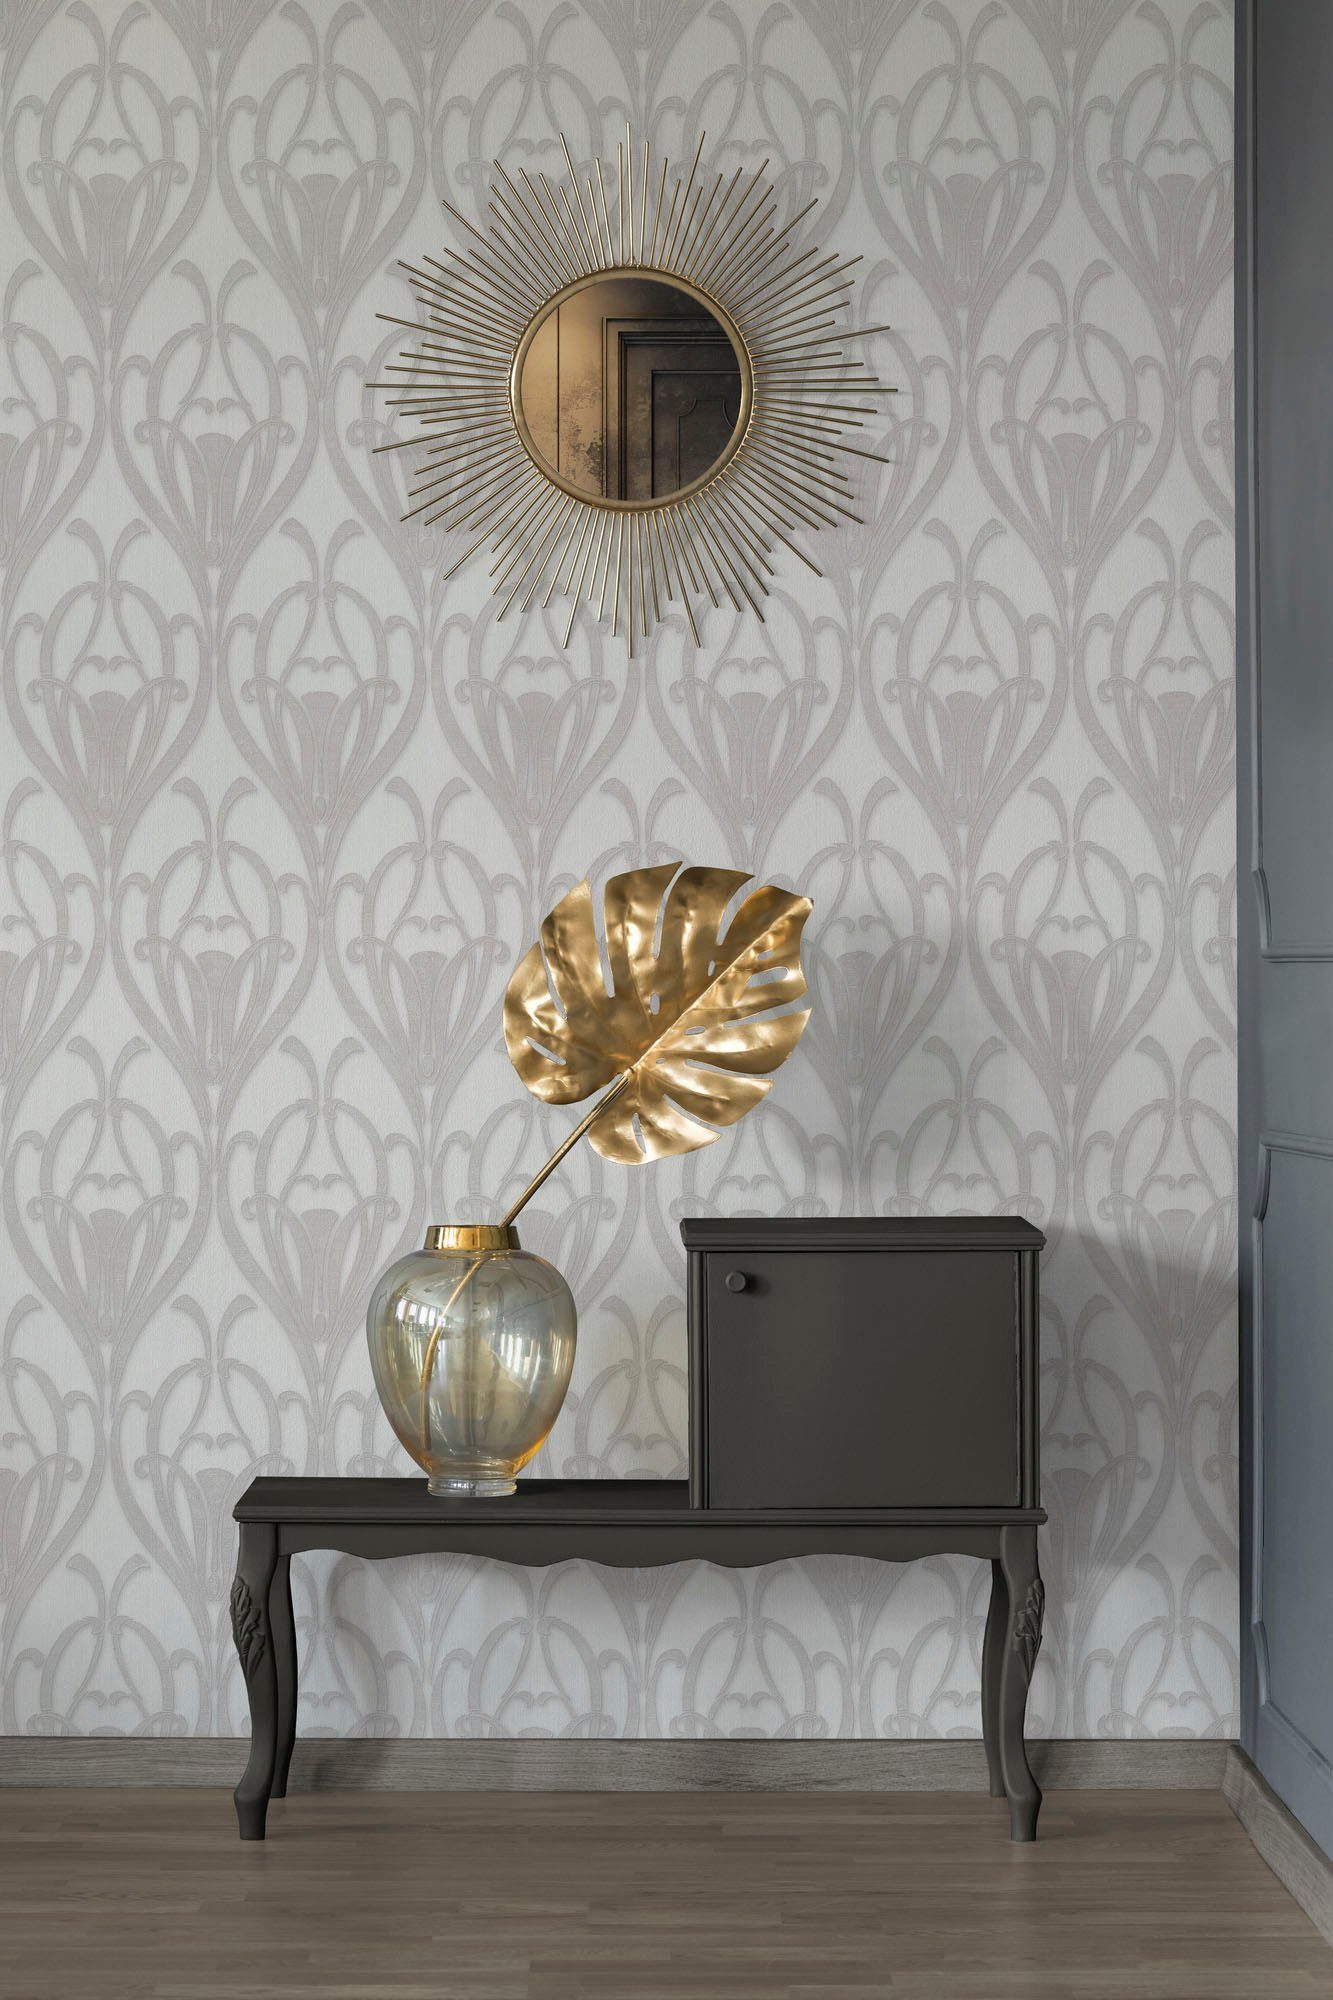 Tapete ornamental, gemustert, Ornament Mata Barock, strukturiert, grau/weiß Hari, Vliestapete Barock living walls